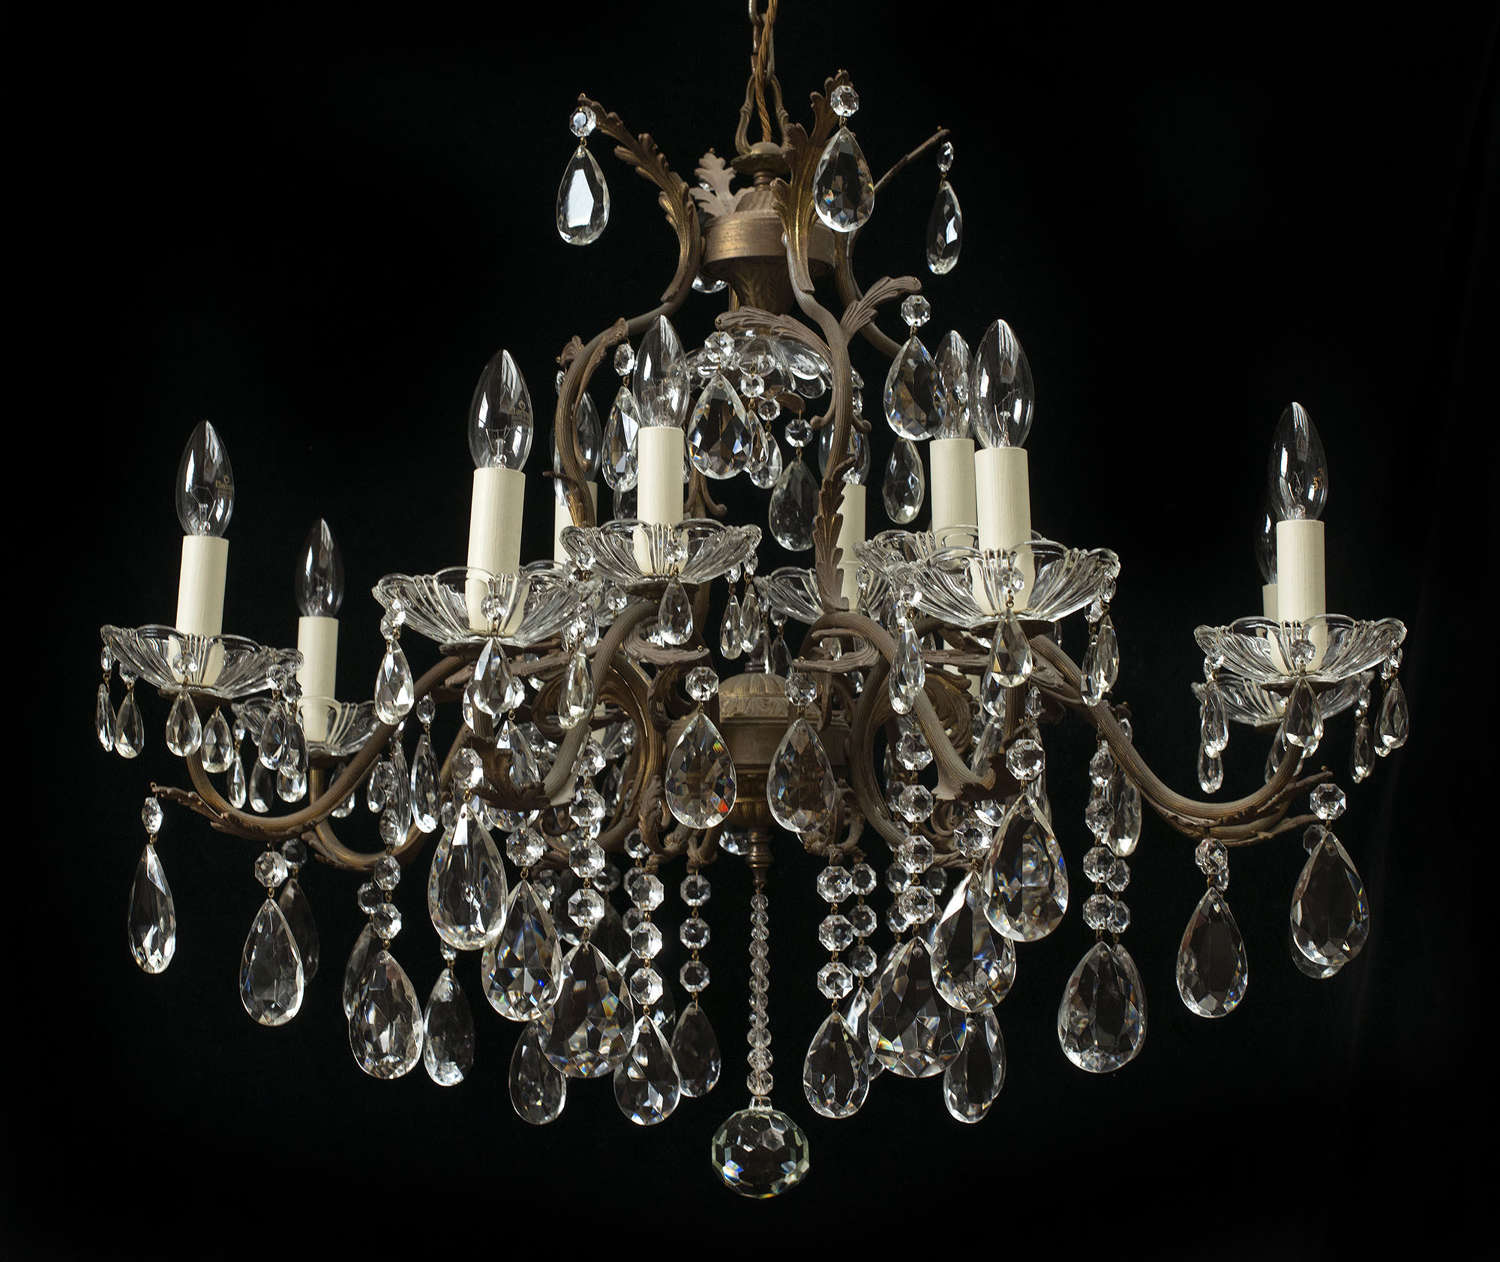 Large bronze 2 tiered, 12 light, antique Italian chandelier